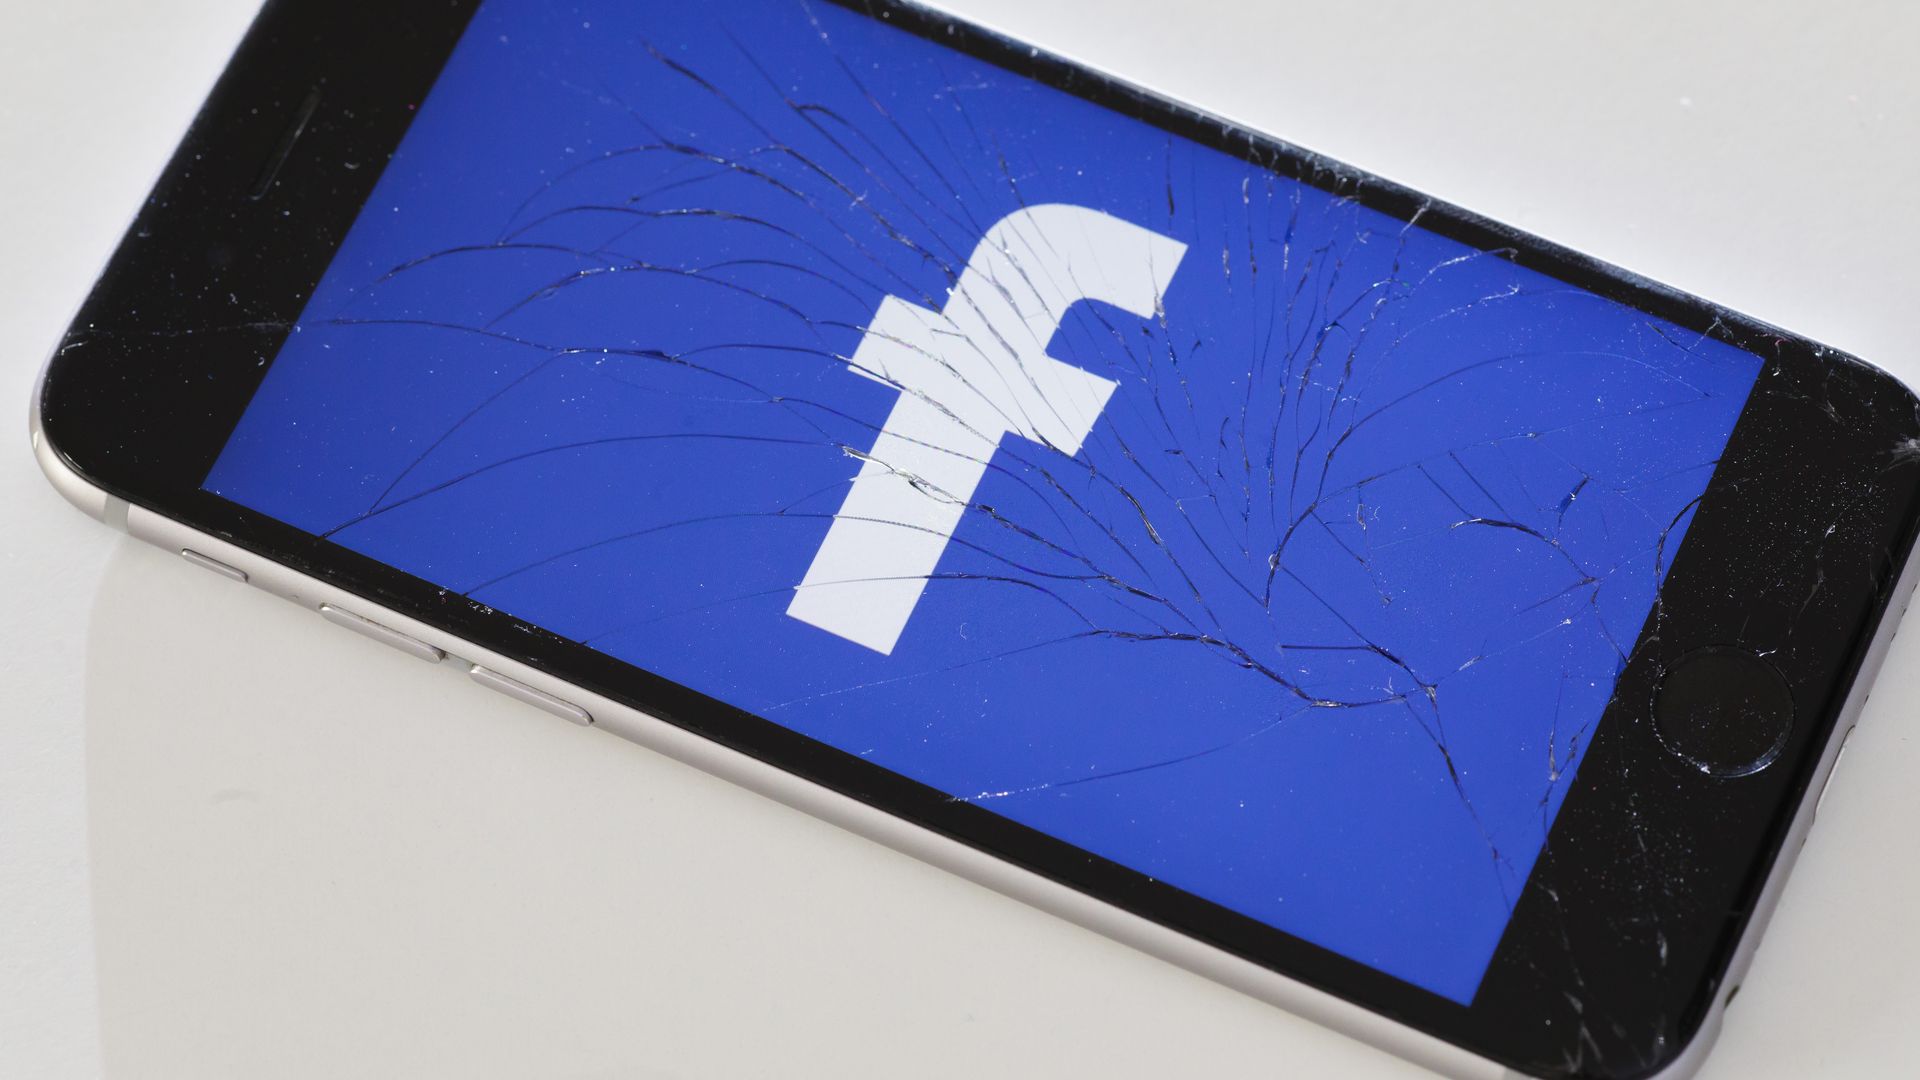 Facebook logo on a cracked smartphone screen